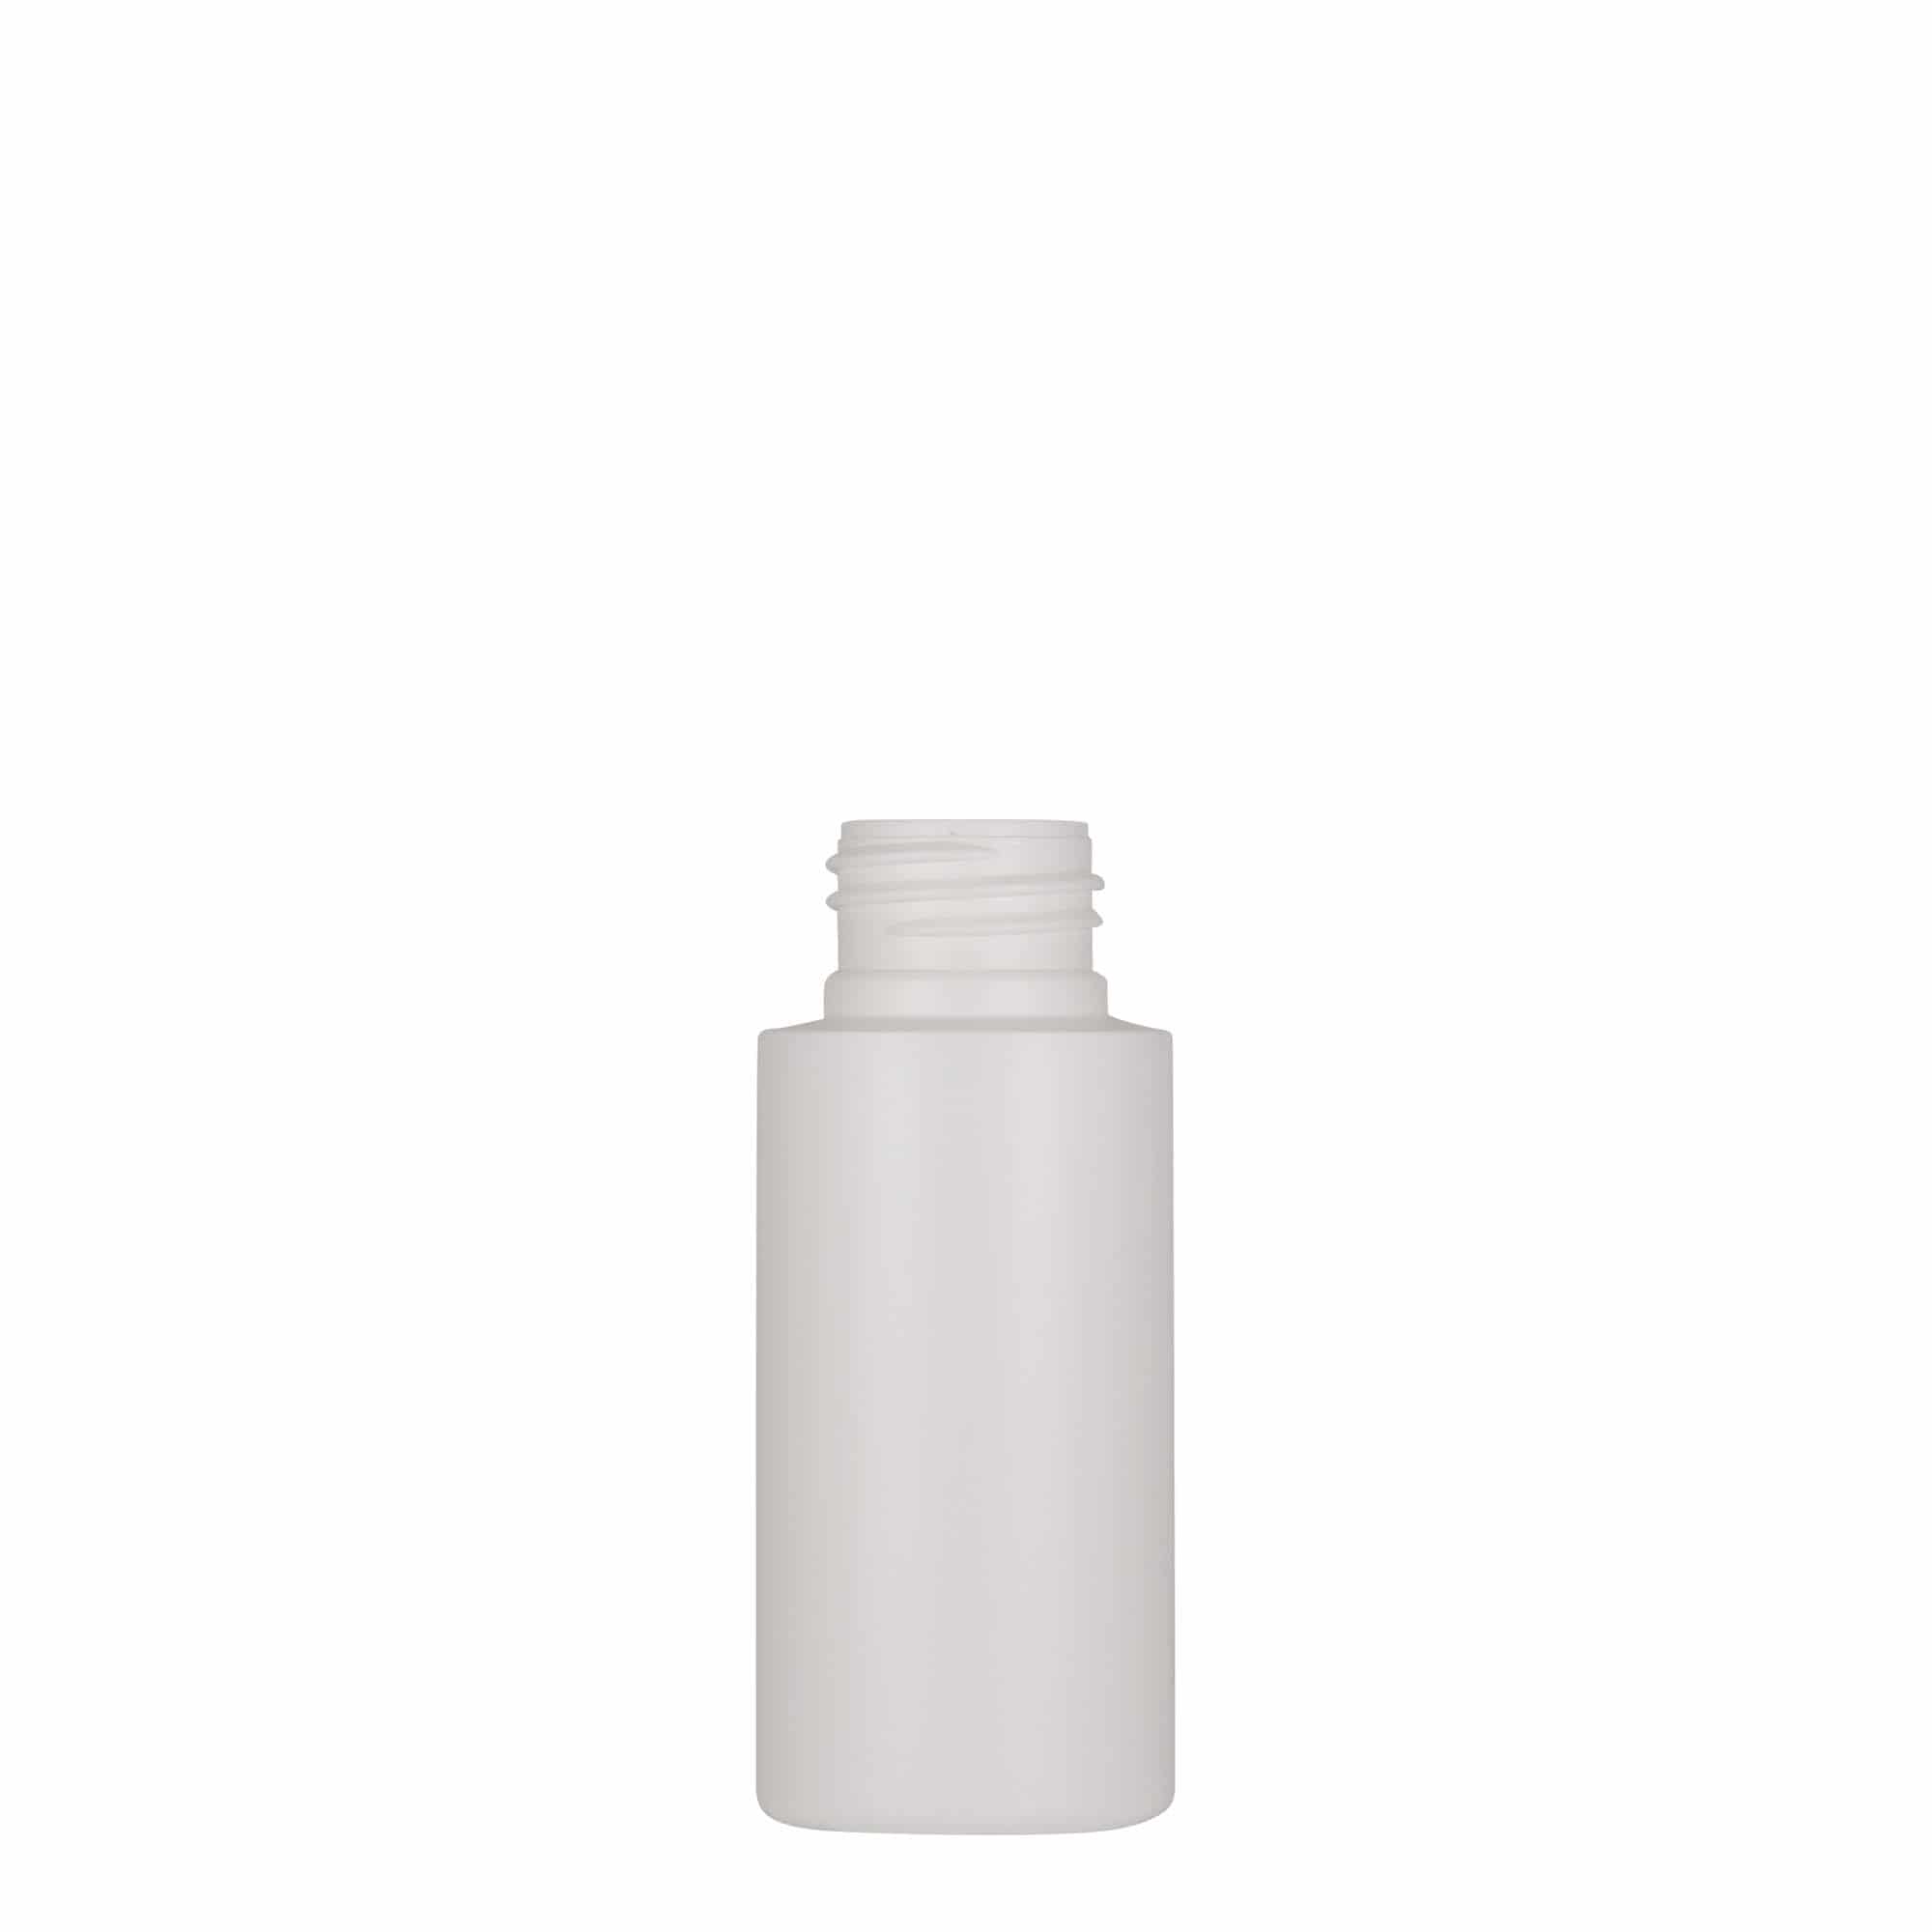 50 ml plastic bottle 'Pipe', green HDPE, white, closure: GPI 24/410